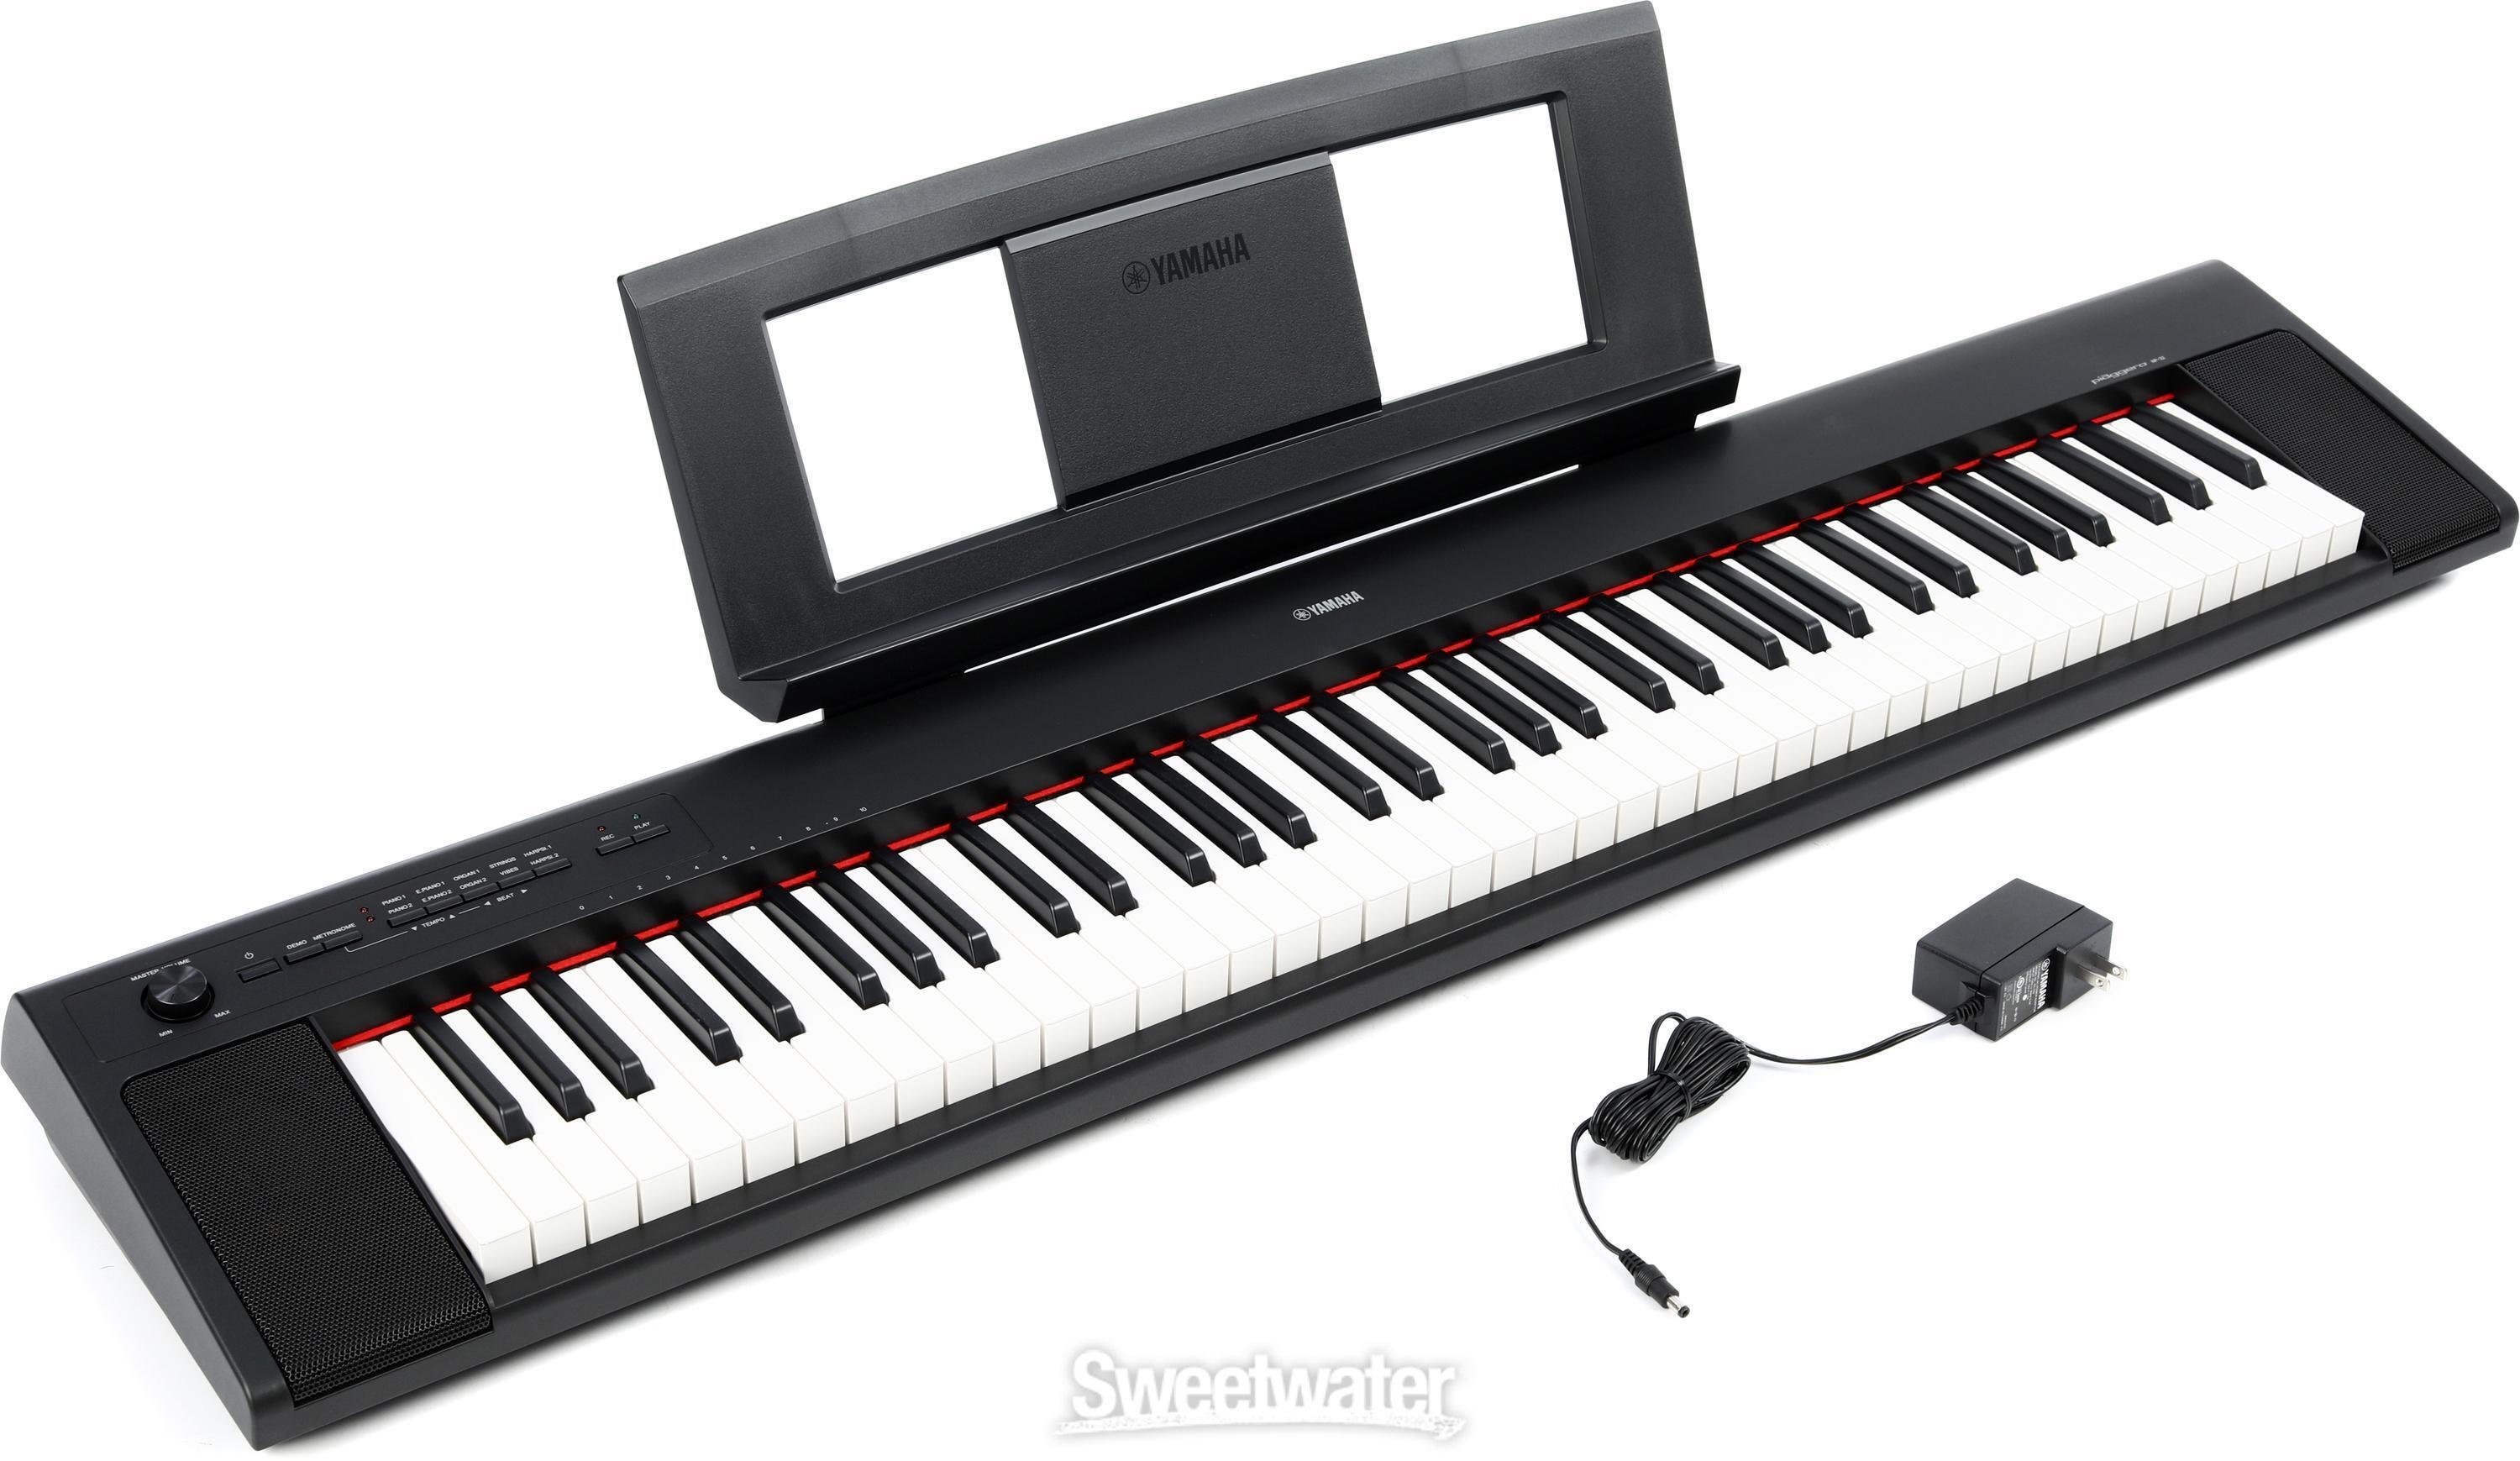 Yamaha Piaggero NP-32 76-key Piano with Speakers and PA150 Power